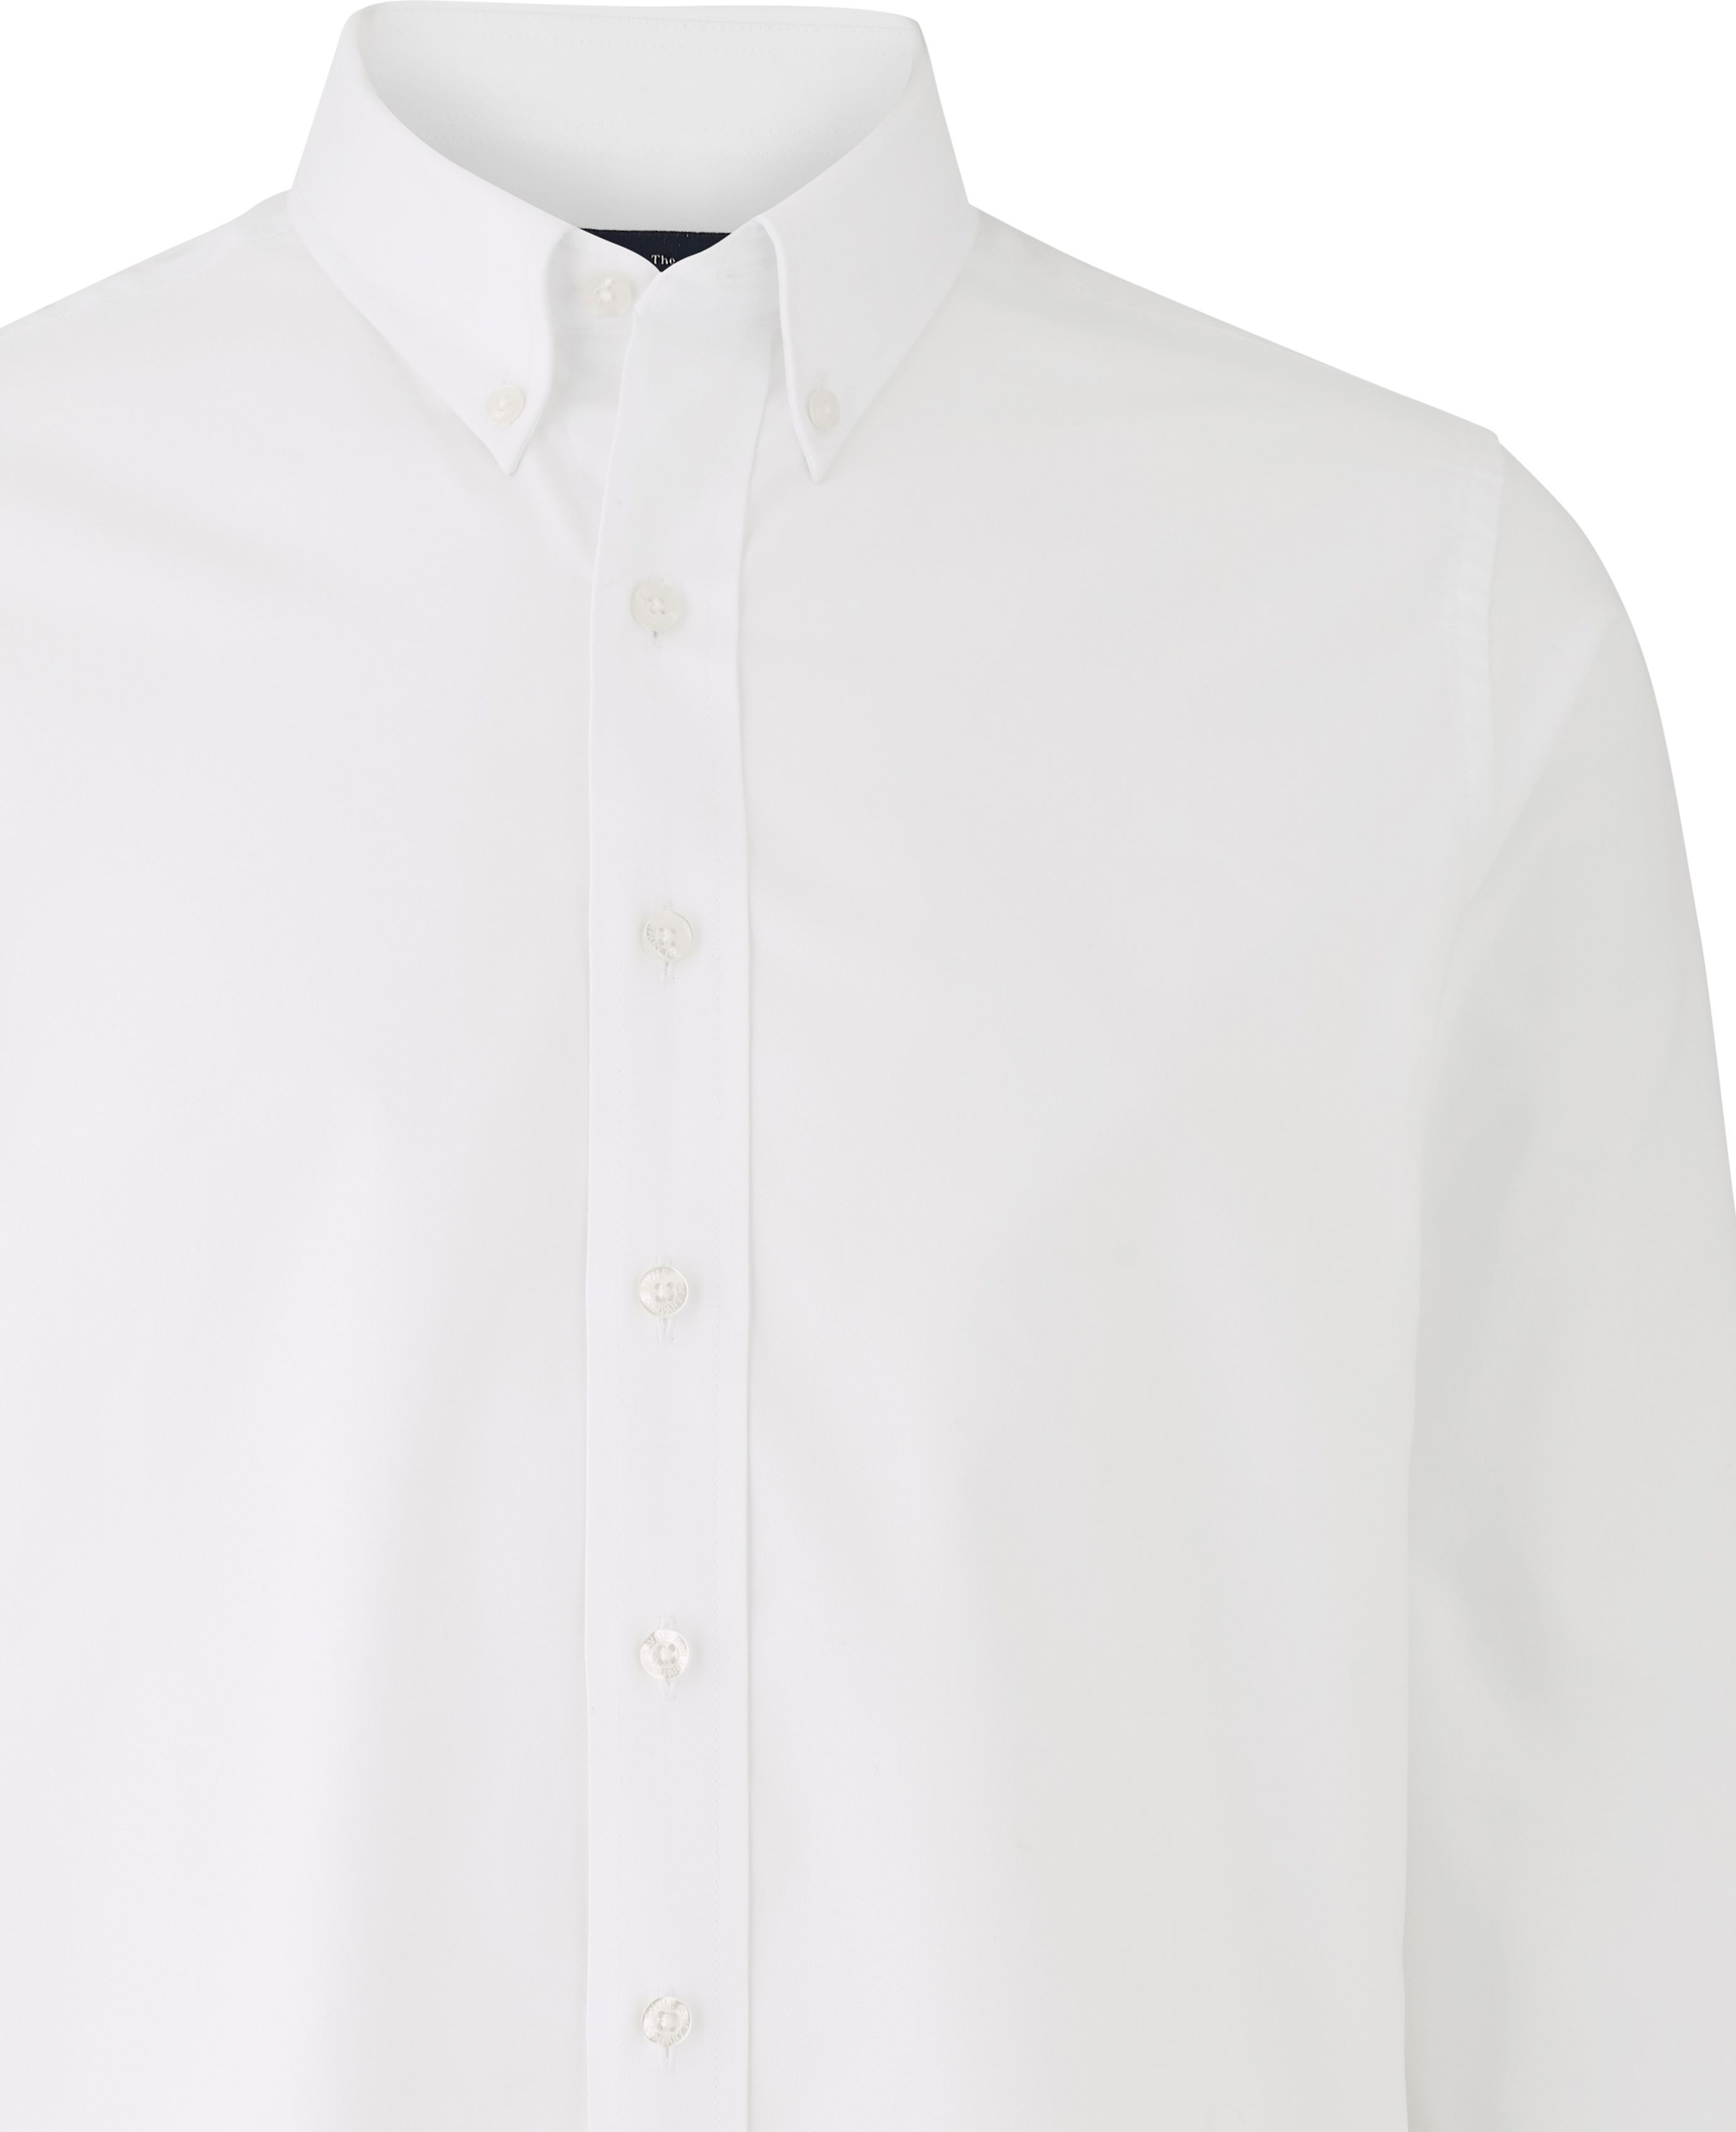 Louis Vuitton, Shirts, Louis Vuitton Mens White Dress Shirt Size 44